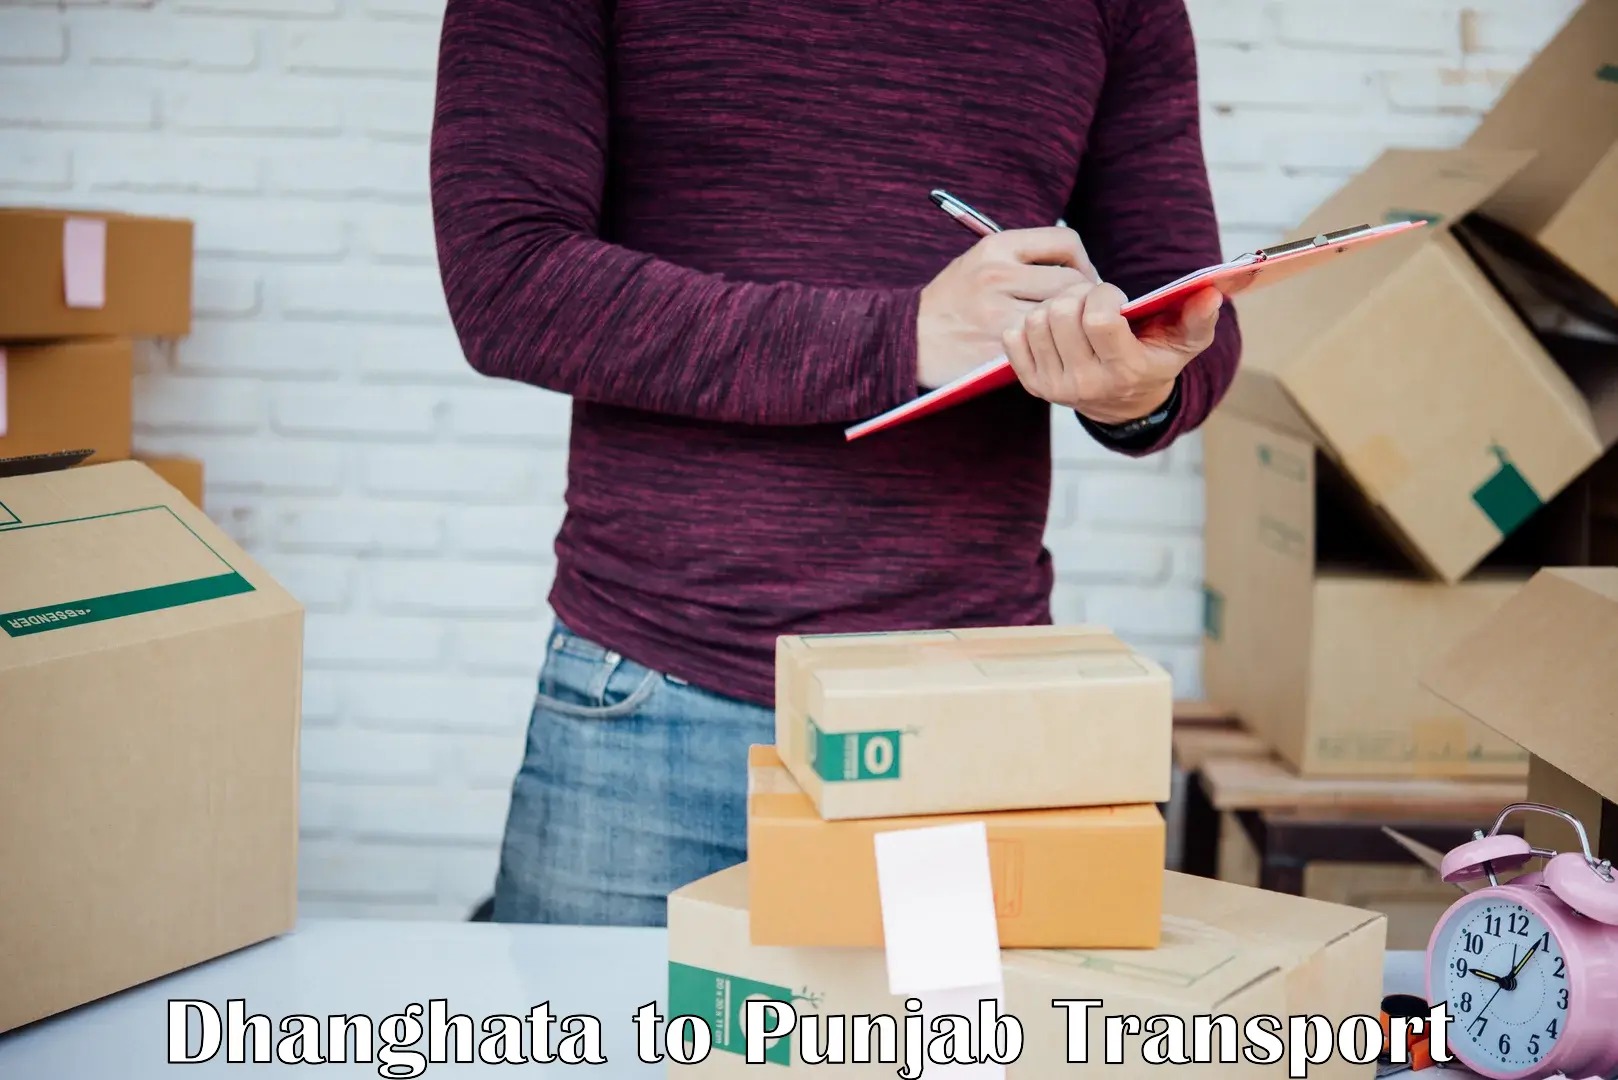 Furniture transport service Dhanghata to Rupnagar